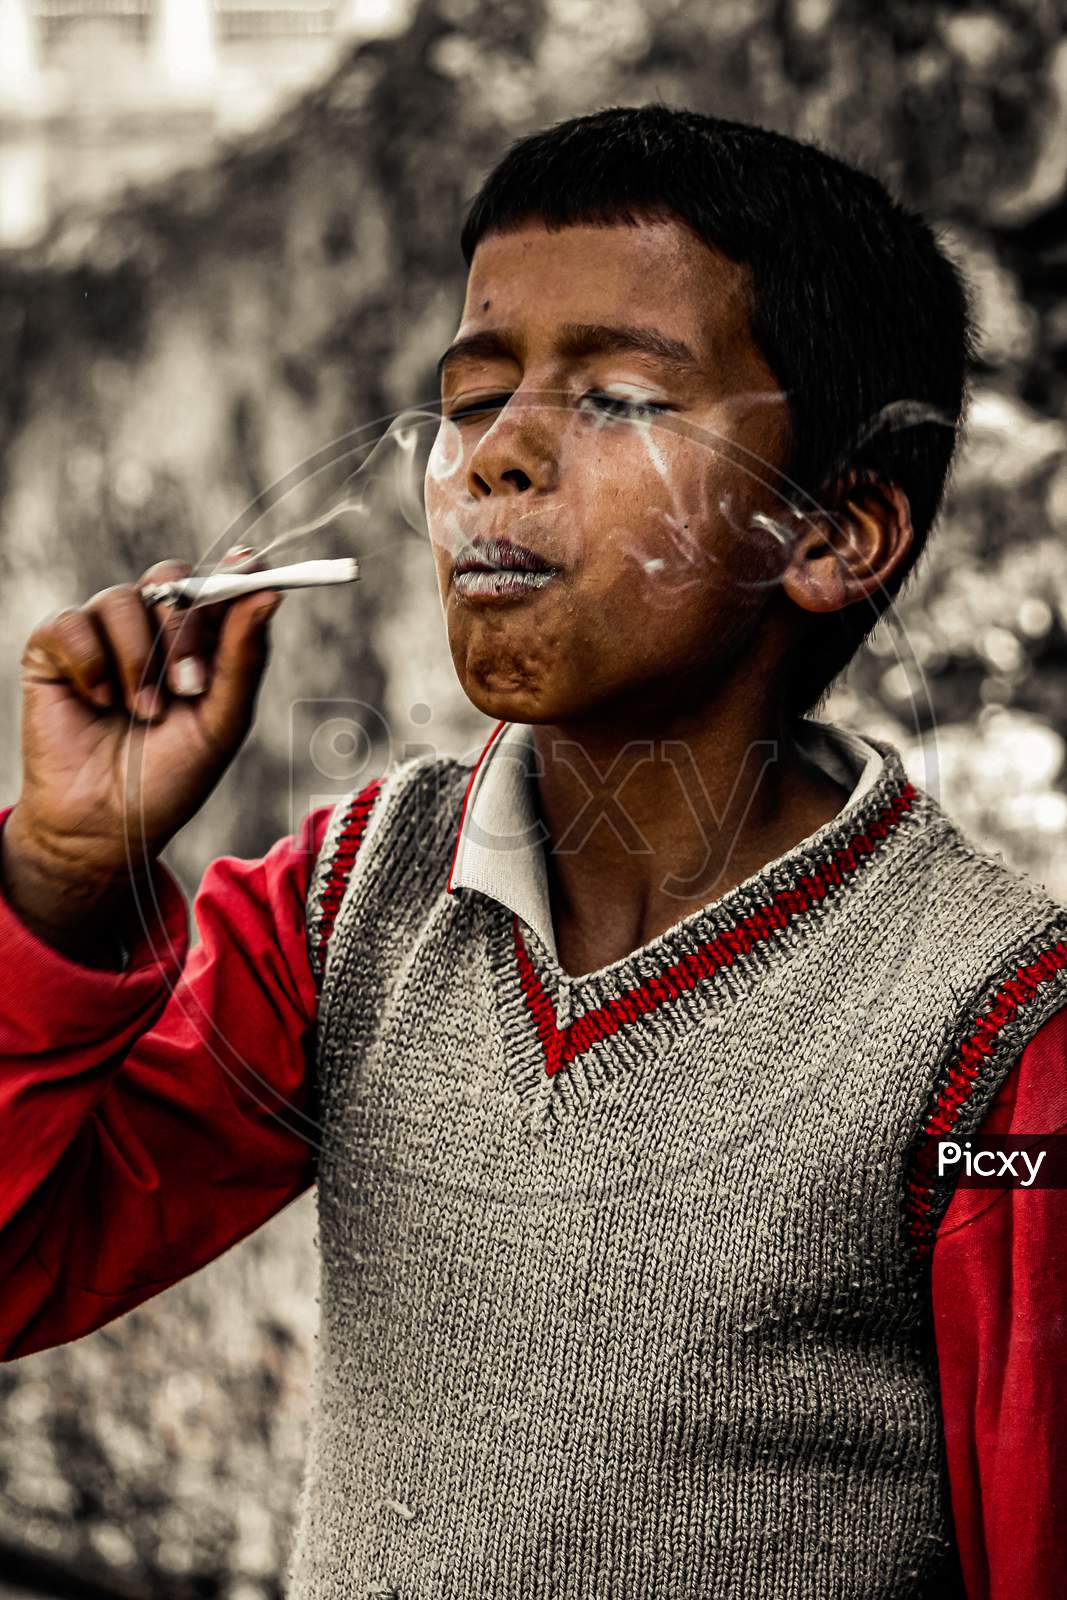 Boy trying a paper smoke.